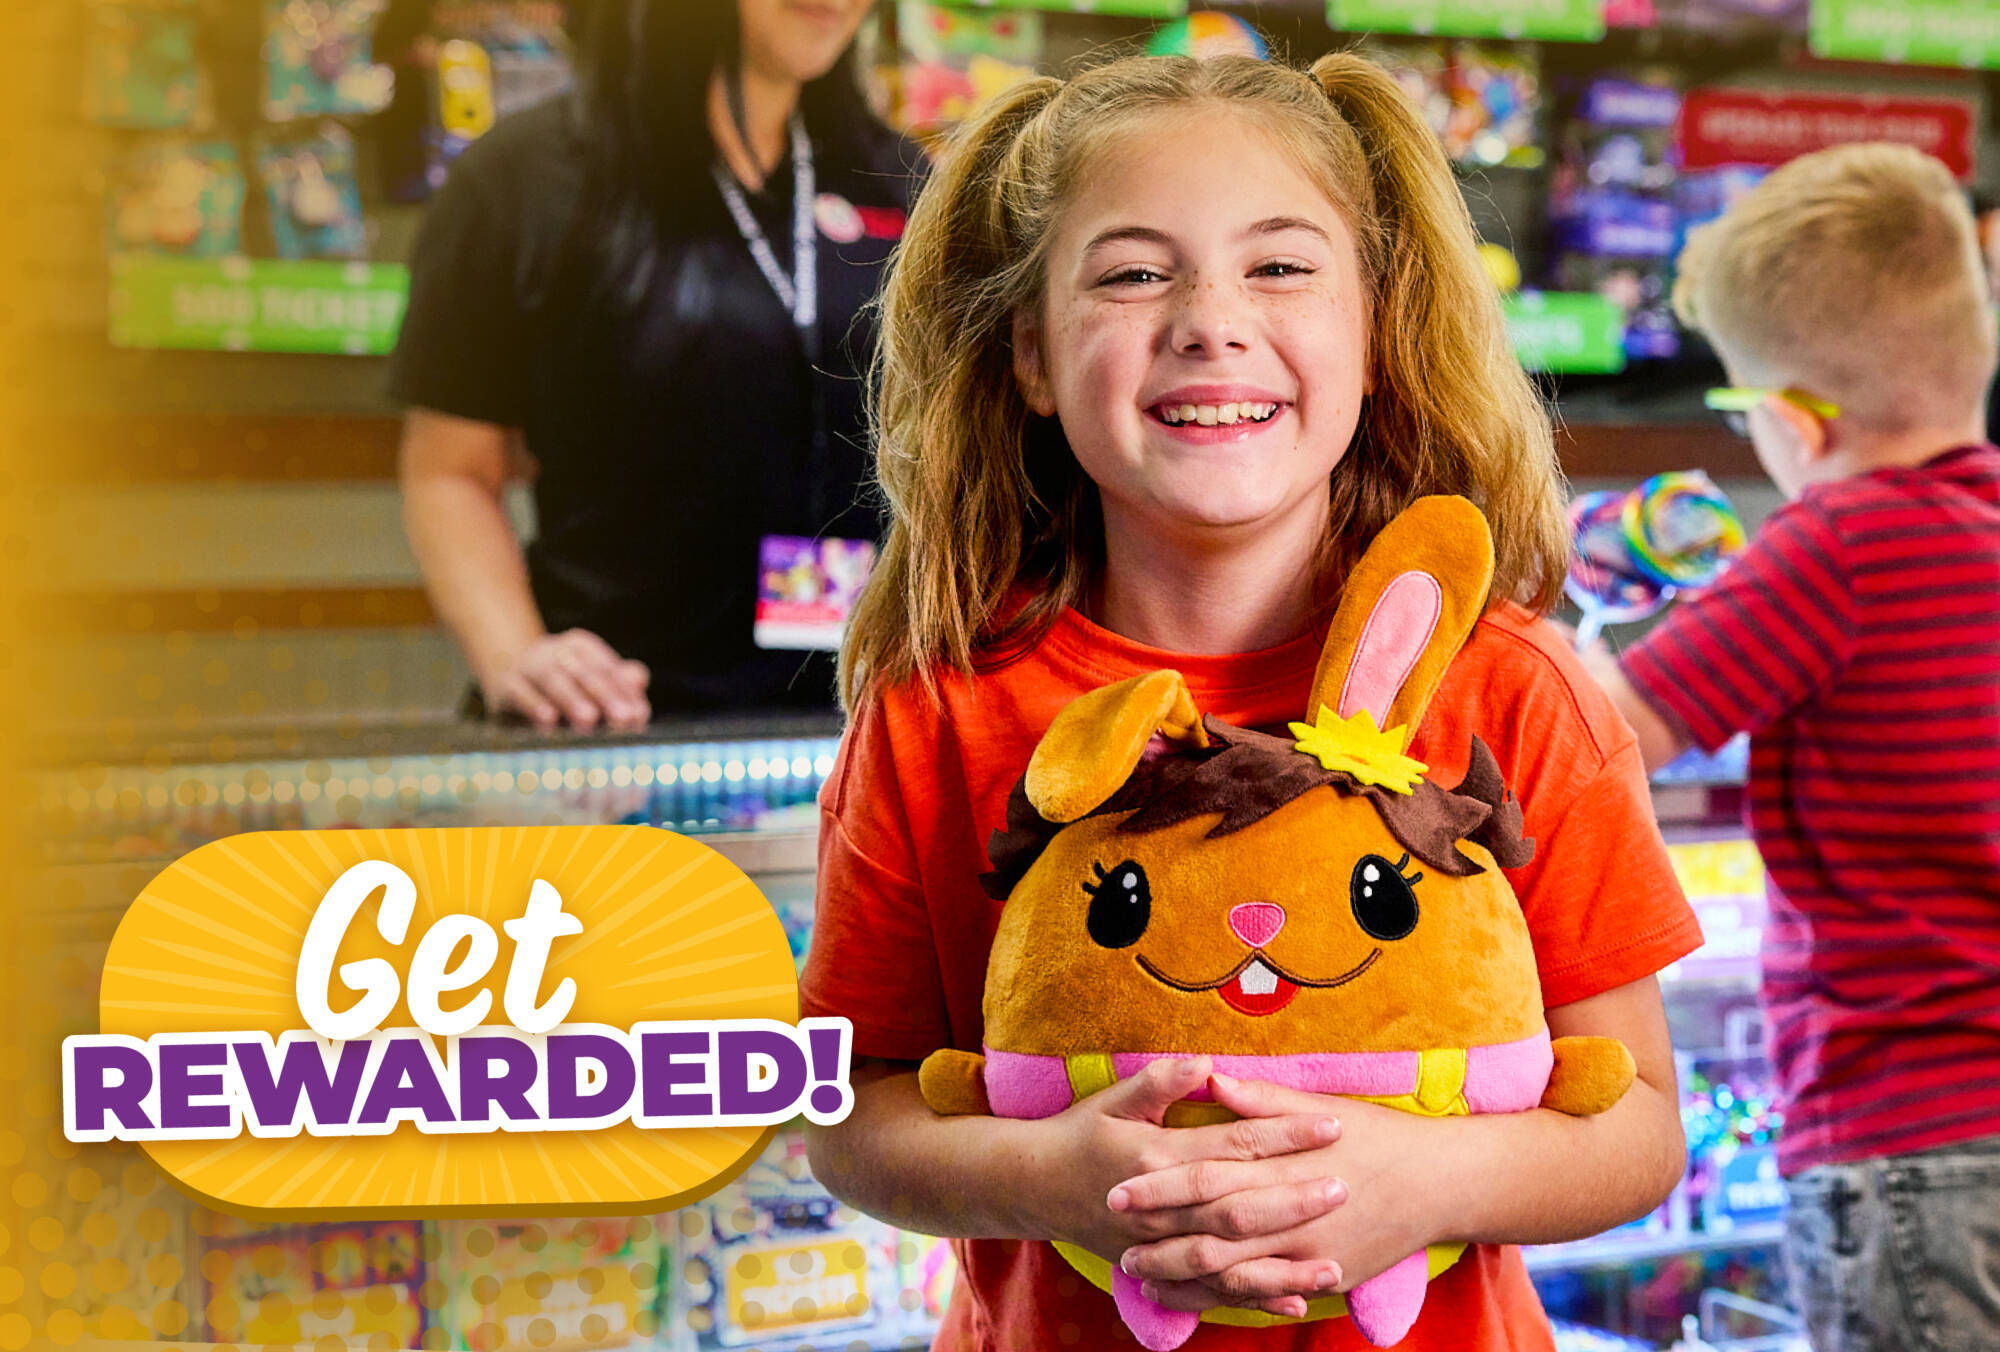 "Get Rewarded!" A kid enjoys her new Bella plush